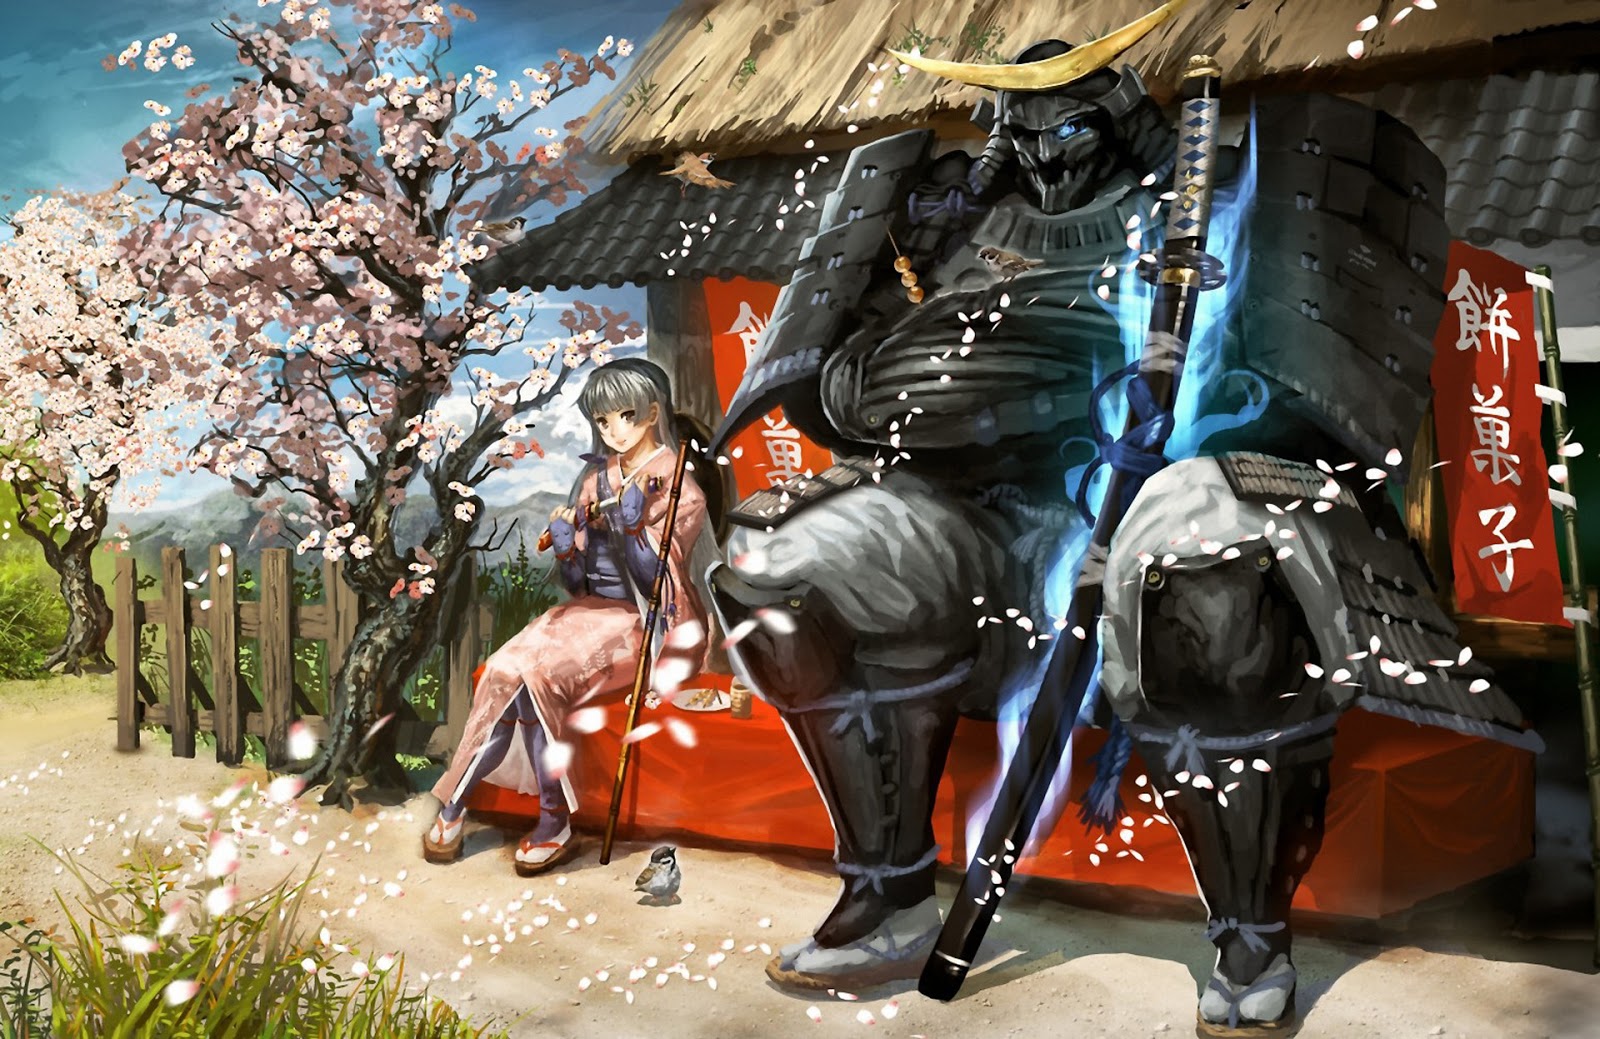 armor wallpaper,tree,plant,travel,leisure,cherry blossom